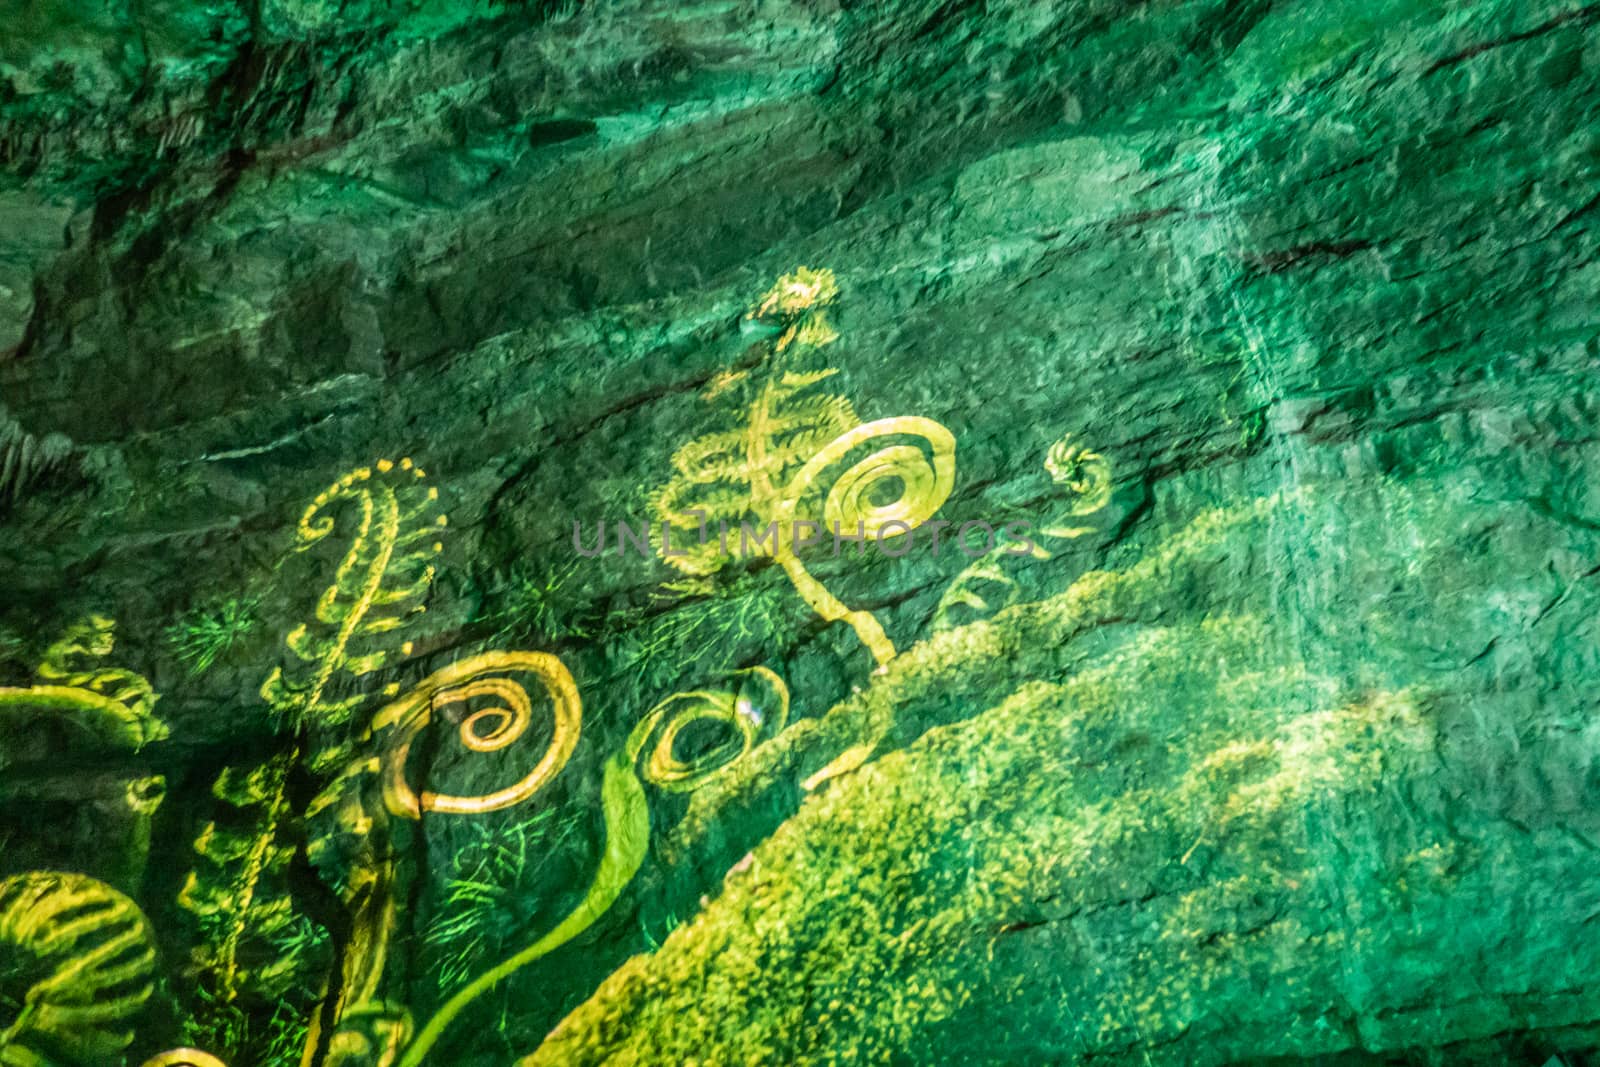 Lightshow on stalactites in Grottes-de-Han, Han-sur-lesse, Belgi by Claudine